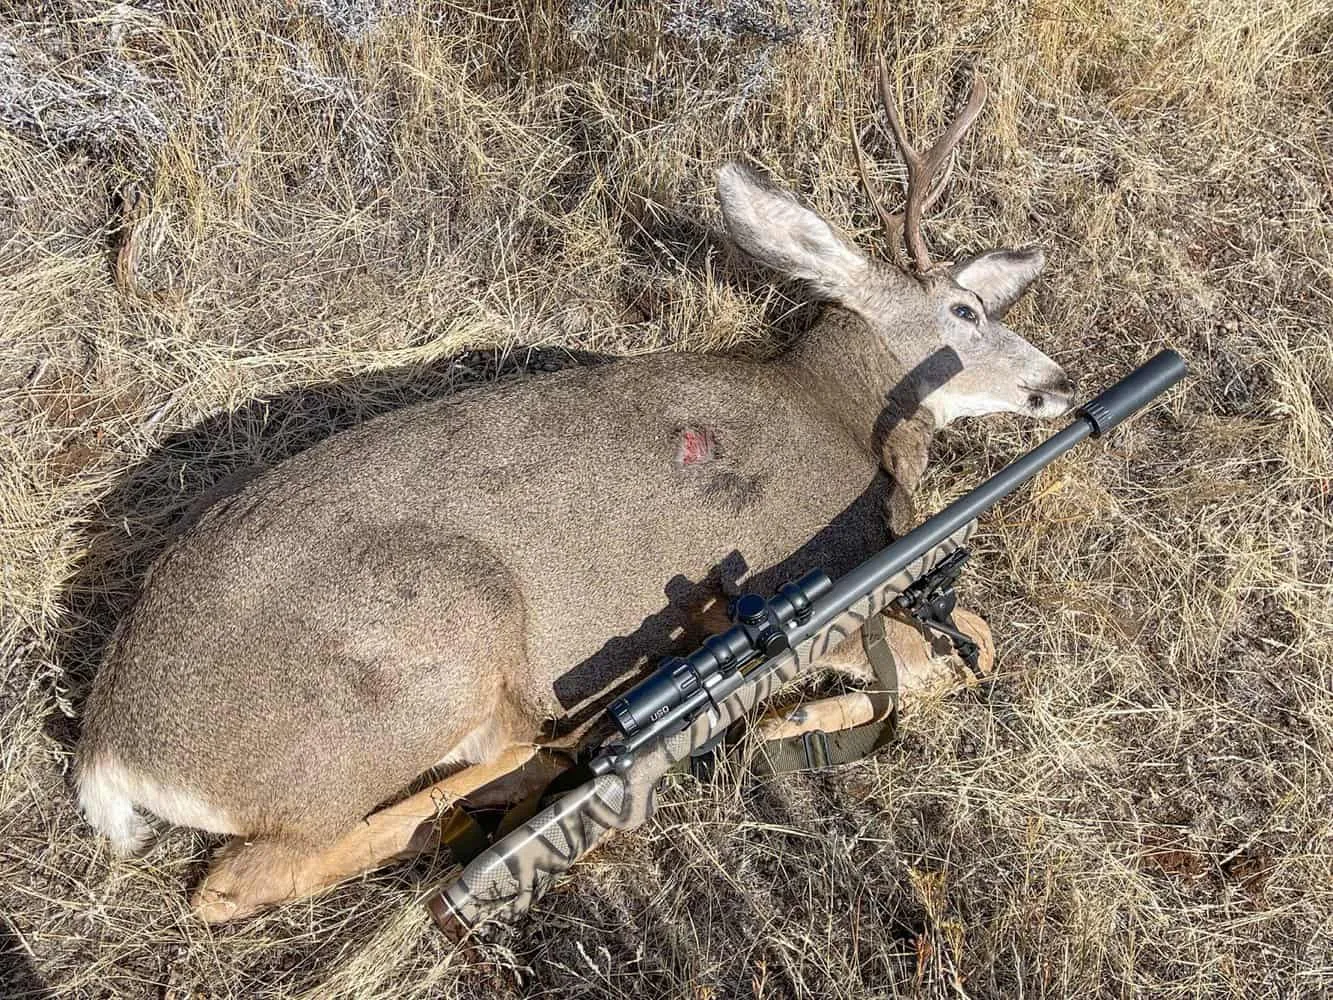 deer shot dead with rifle